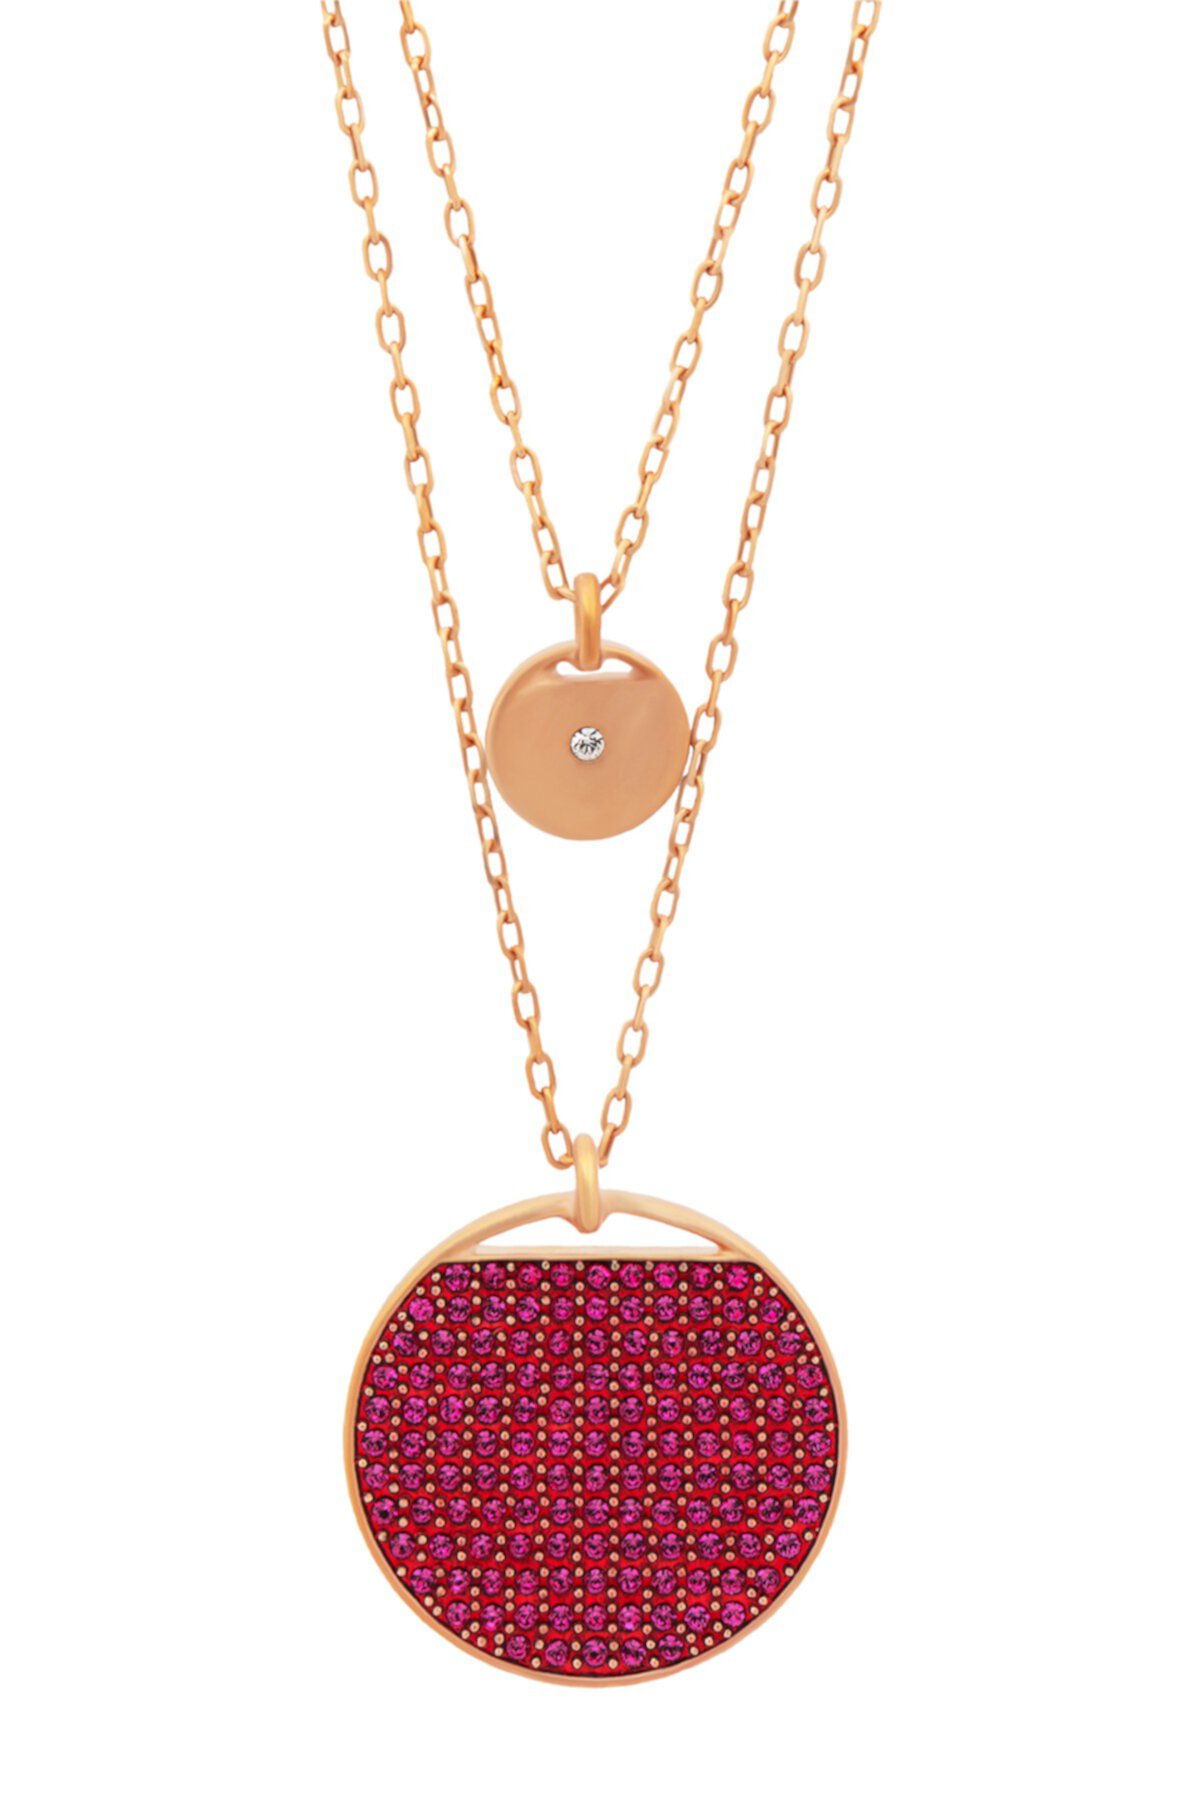 Ginger 18K Rose Gold Plated Pave Pink Swarovski Crystal Layered Pendant Necklace Swarovski